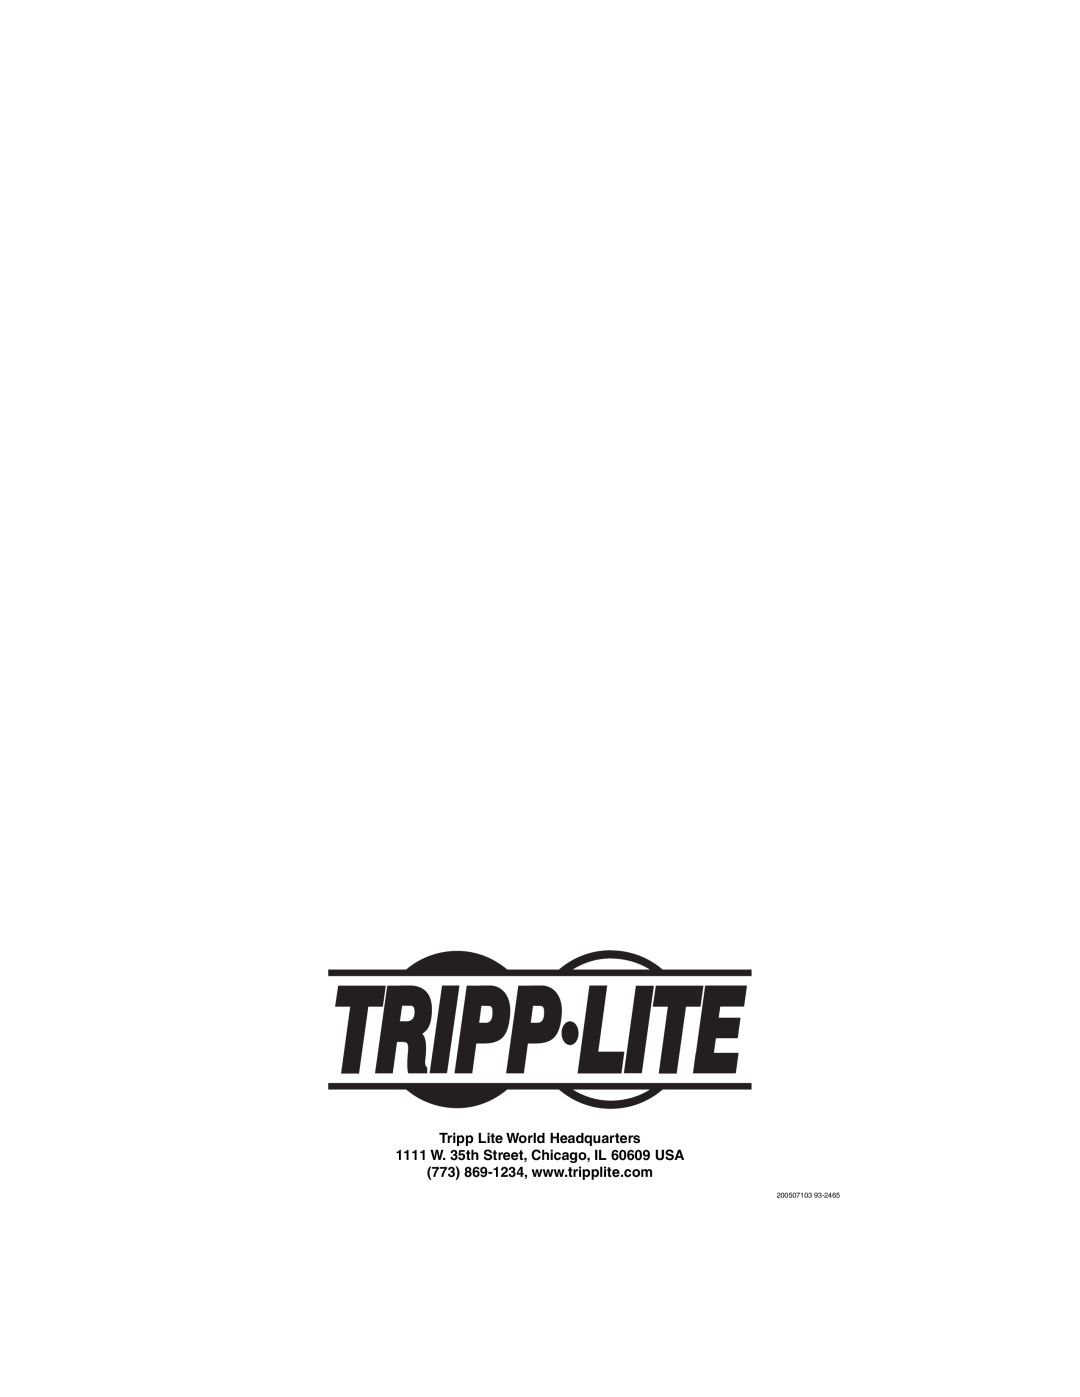 Tripp Lite B004-008 owner manual Tripp Lite World Headquarters, 1111 W. 35th Street, Chicago, IL 60609 USA, 200507103 